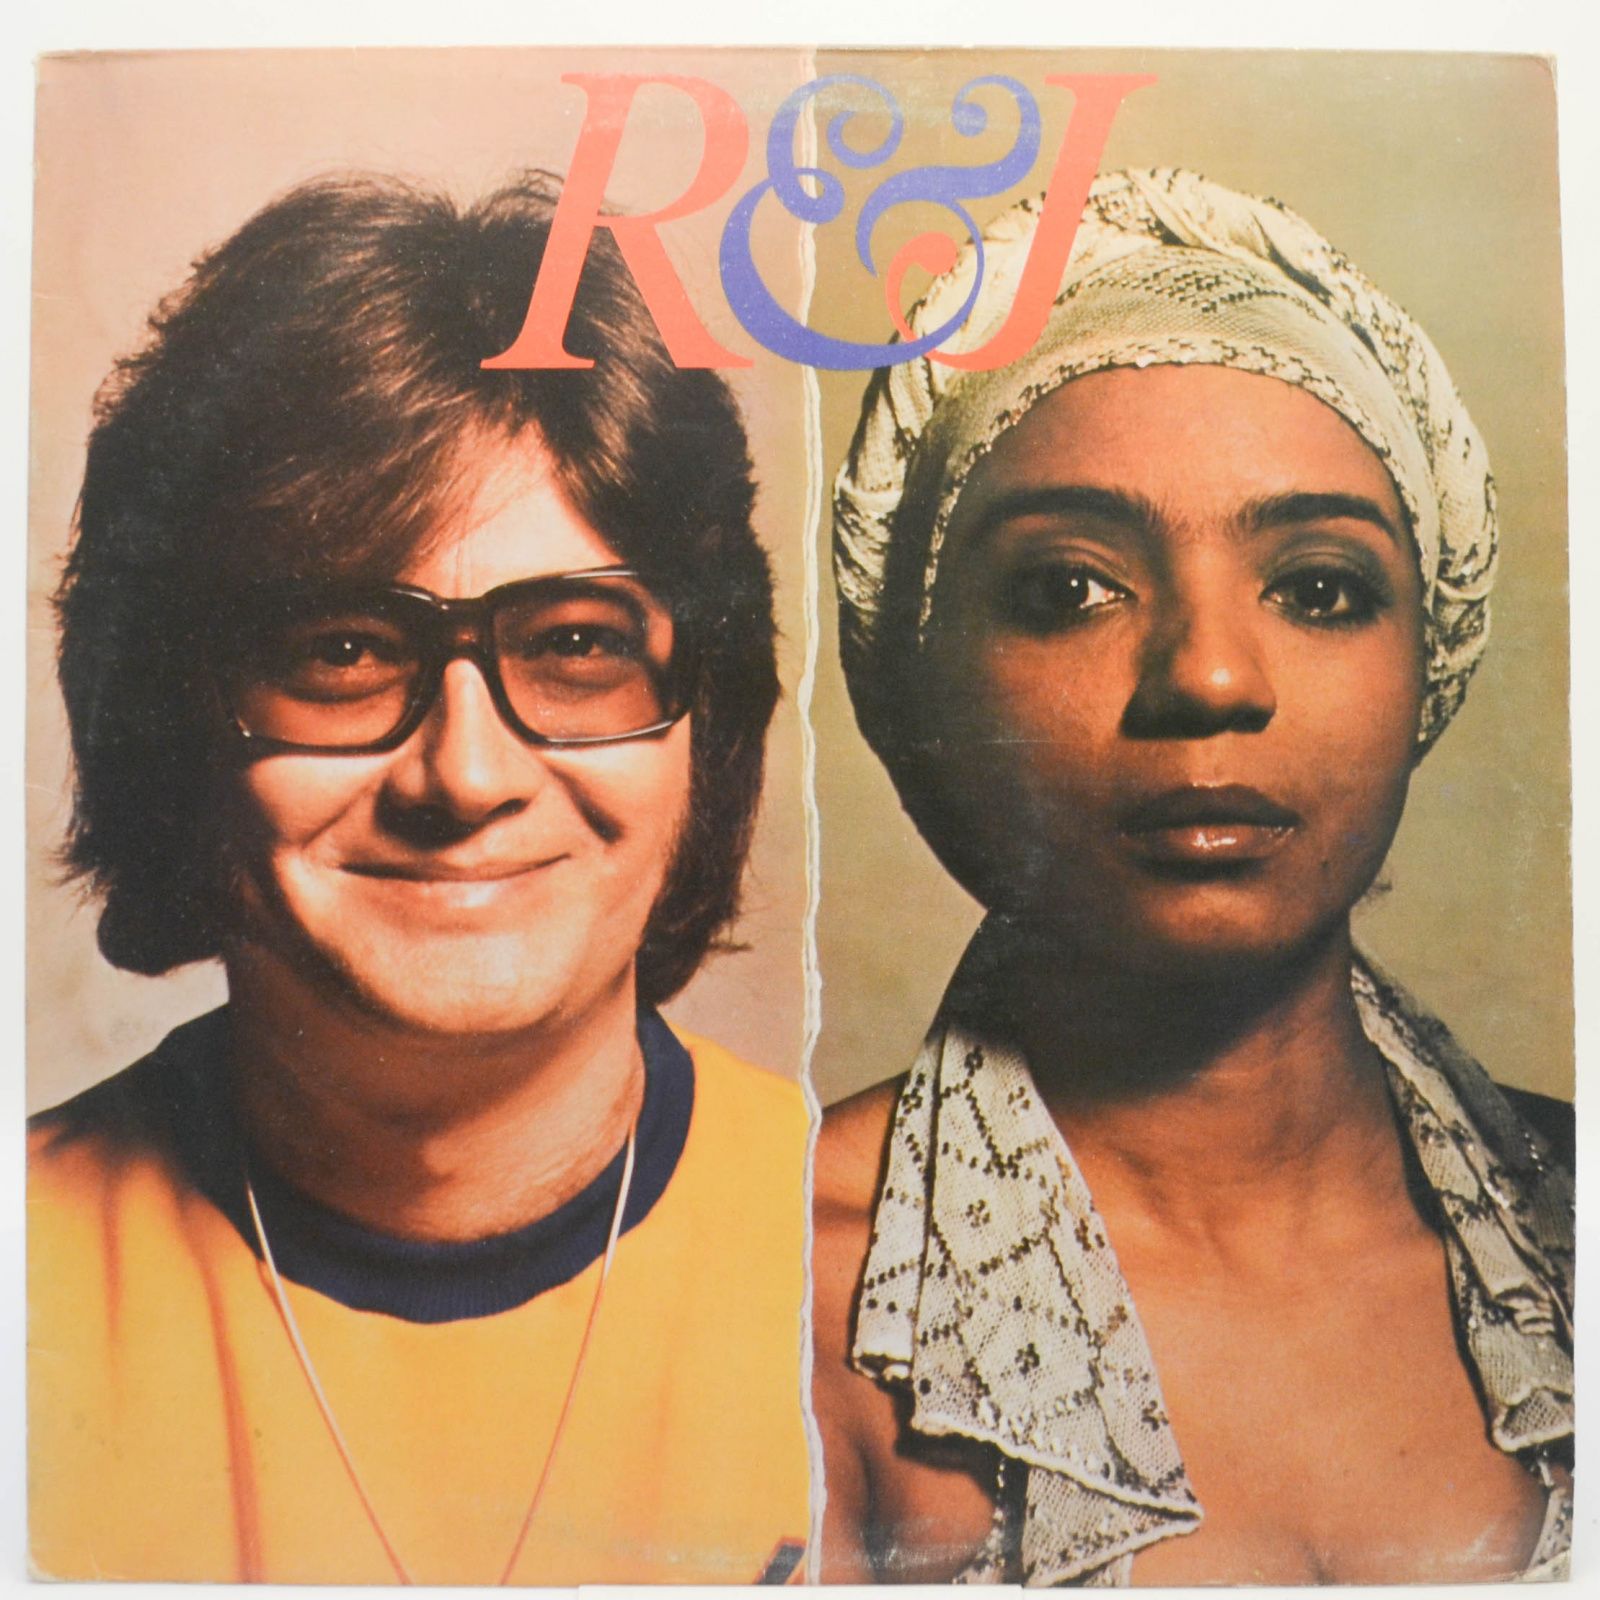 R & J Stone — R & J, 1977